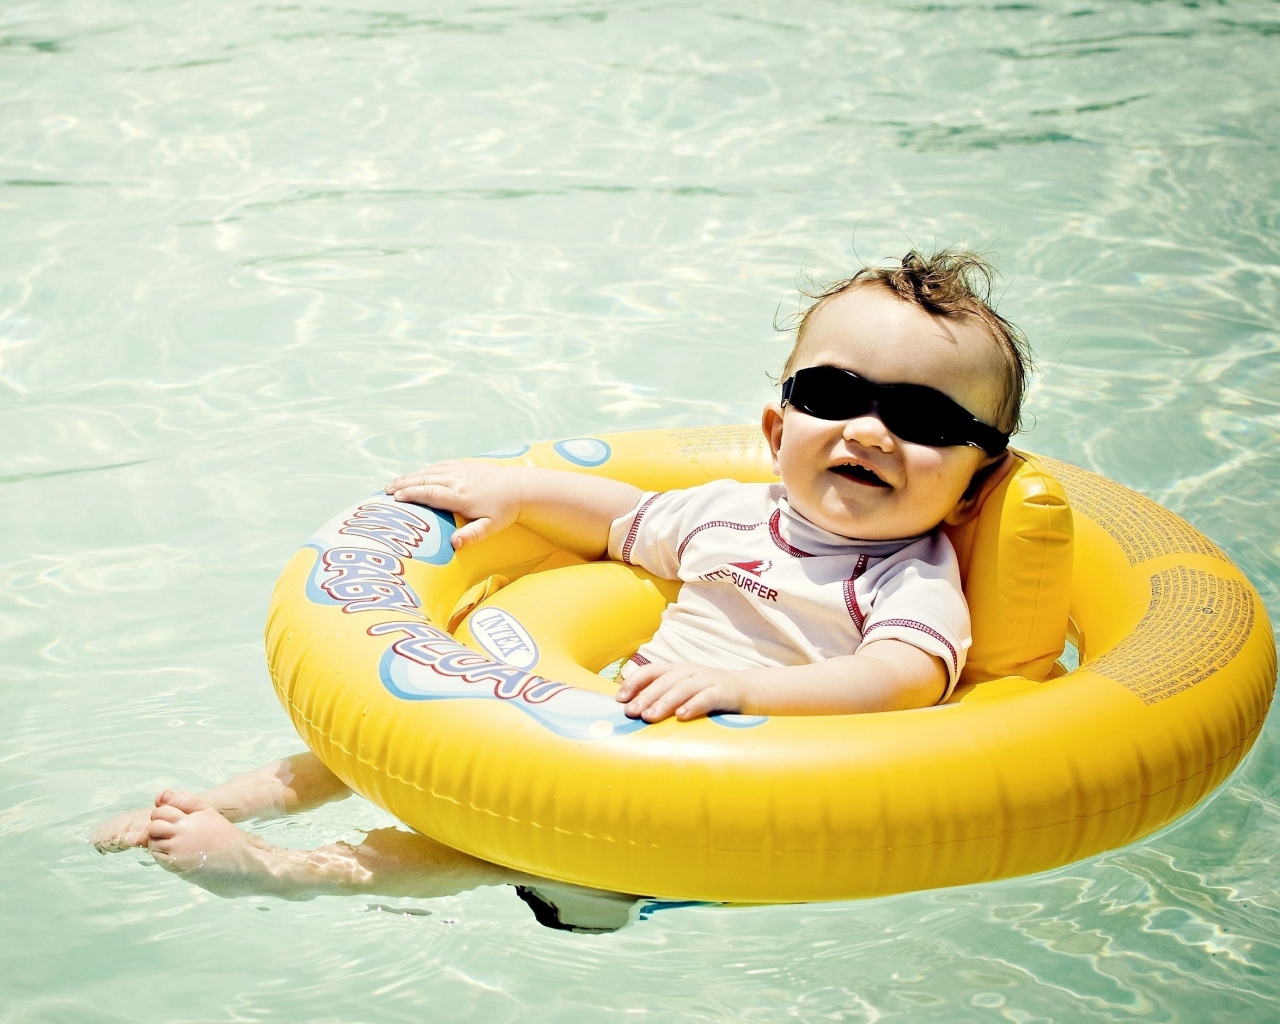 baby_life_buoy_swimming_pool_sun_glasses_54639_1280x1024